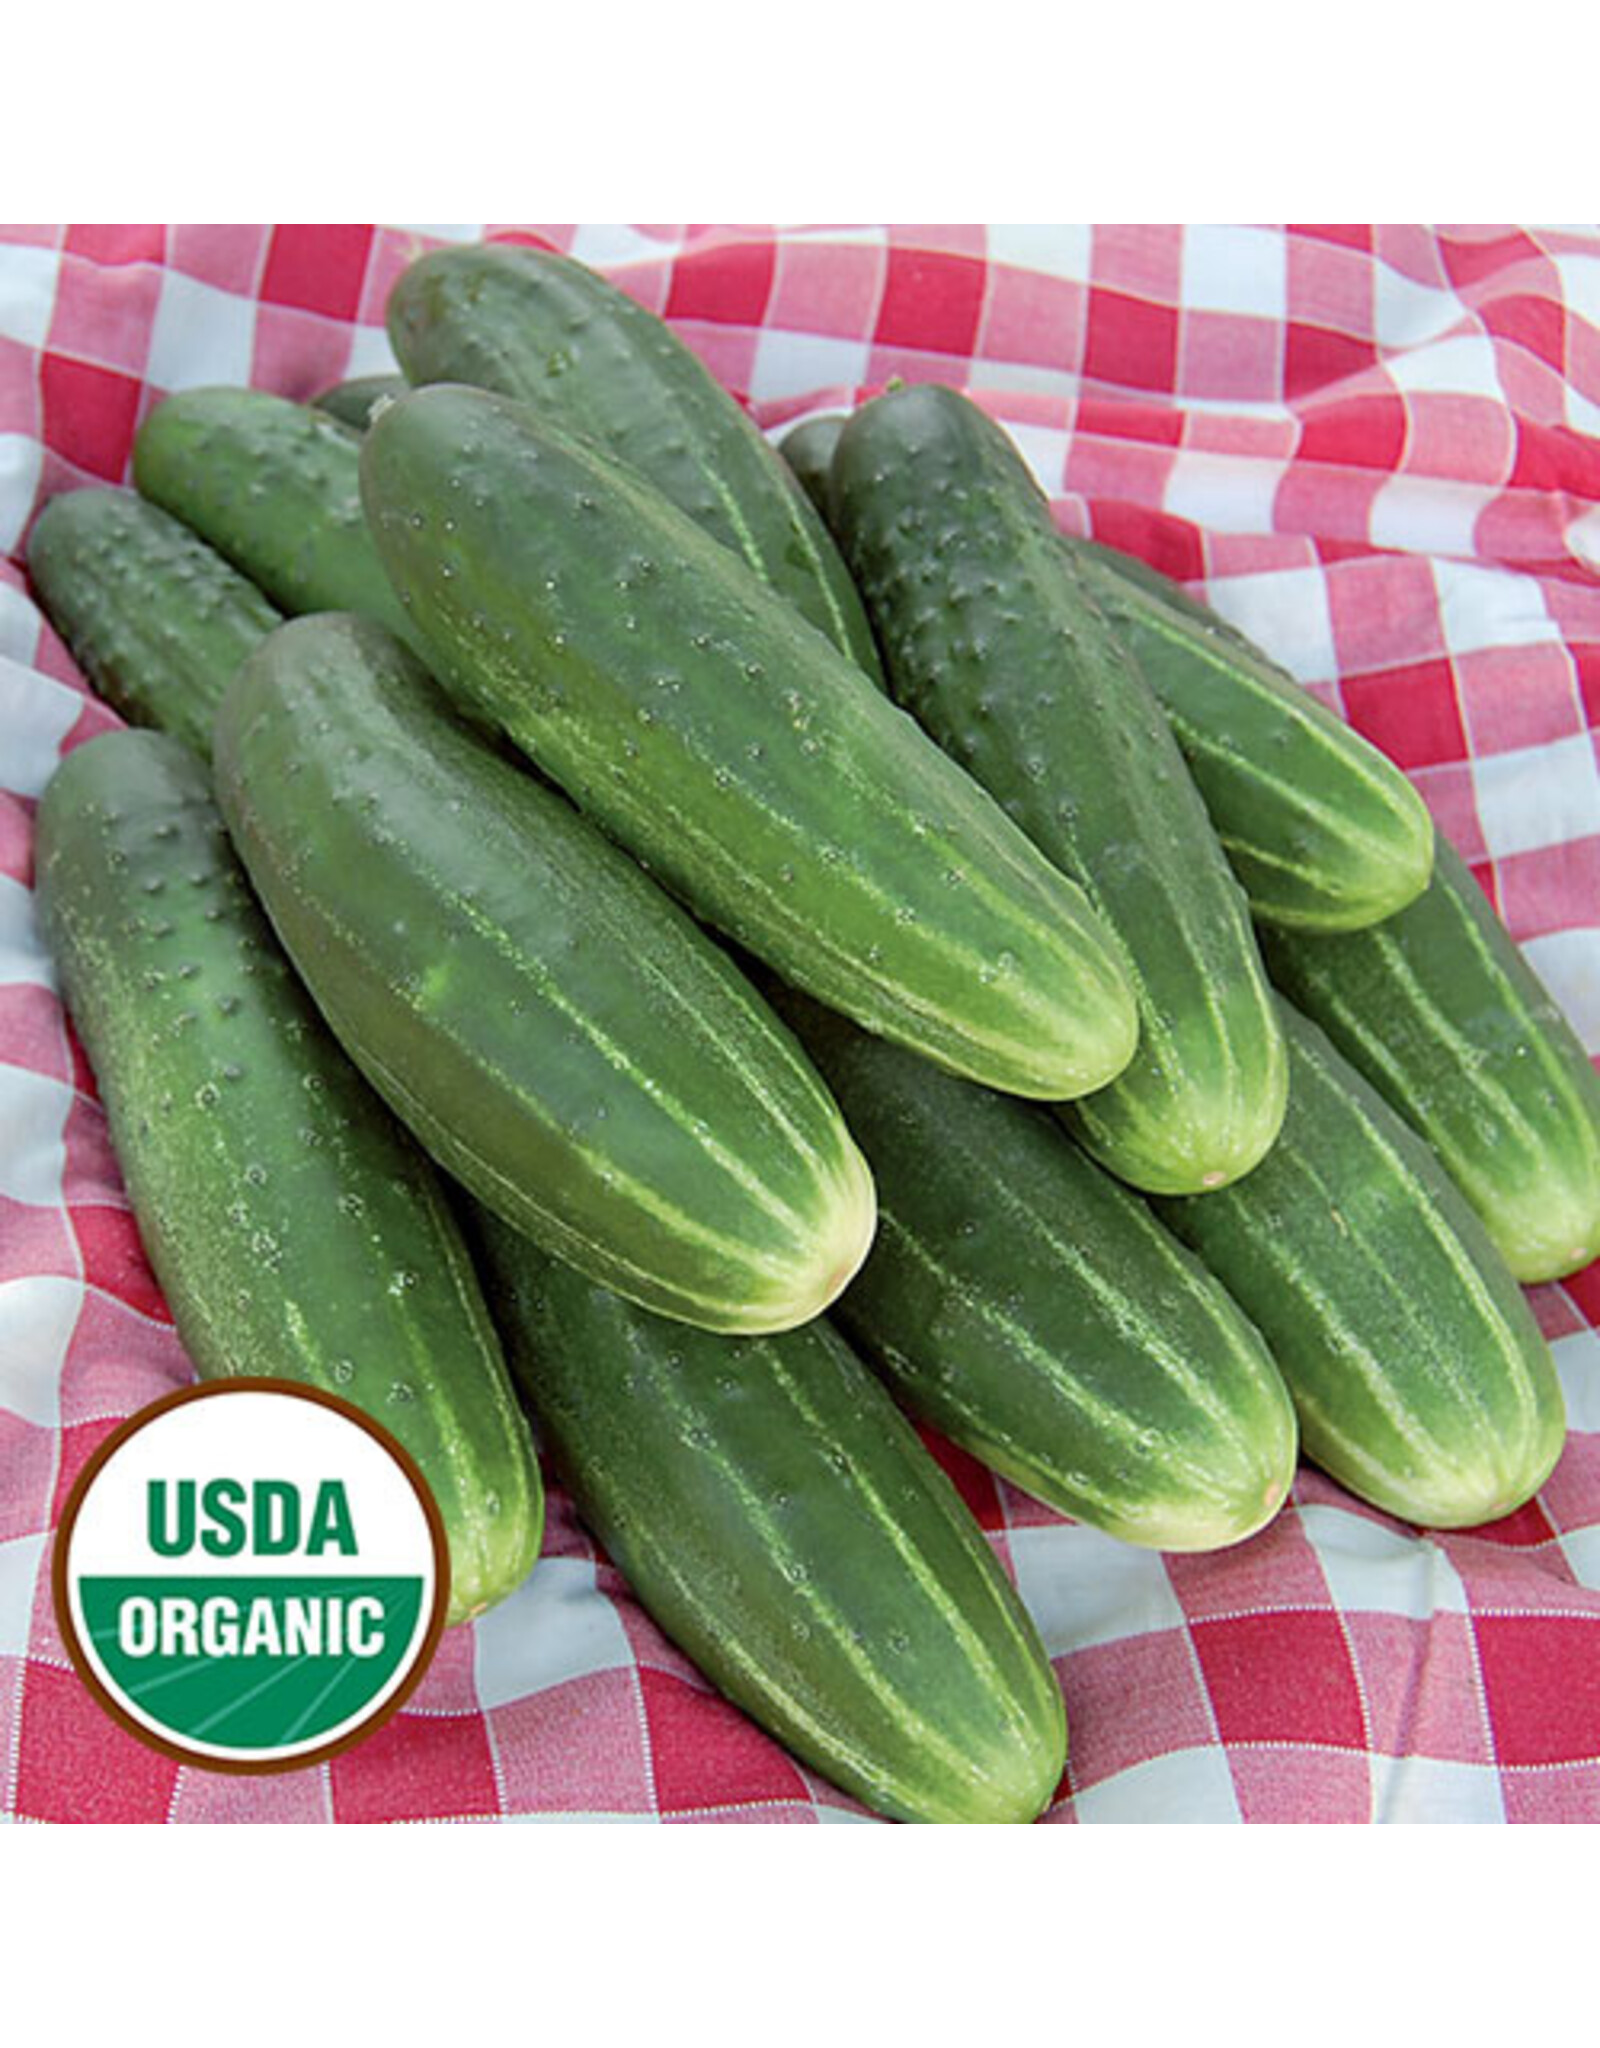 Seed Savers Cucumber - A & C Pickling (organic)